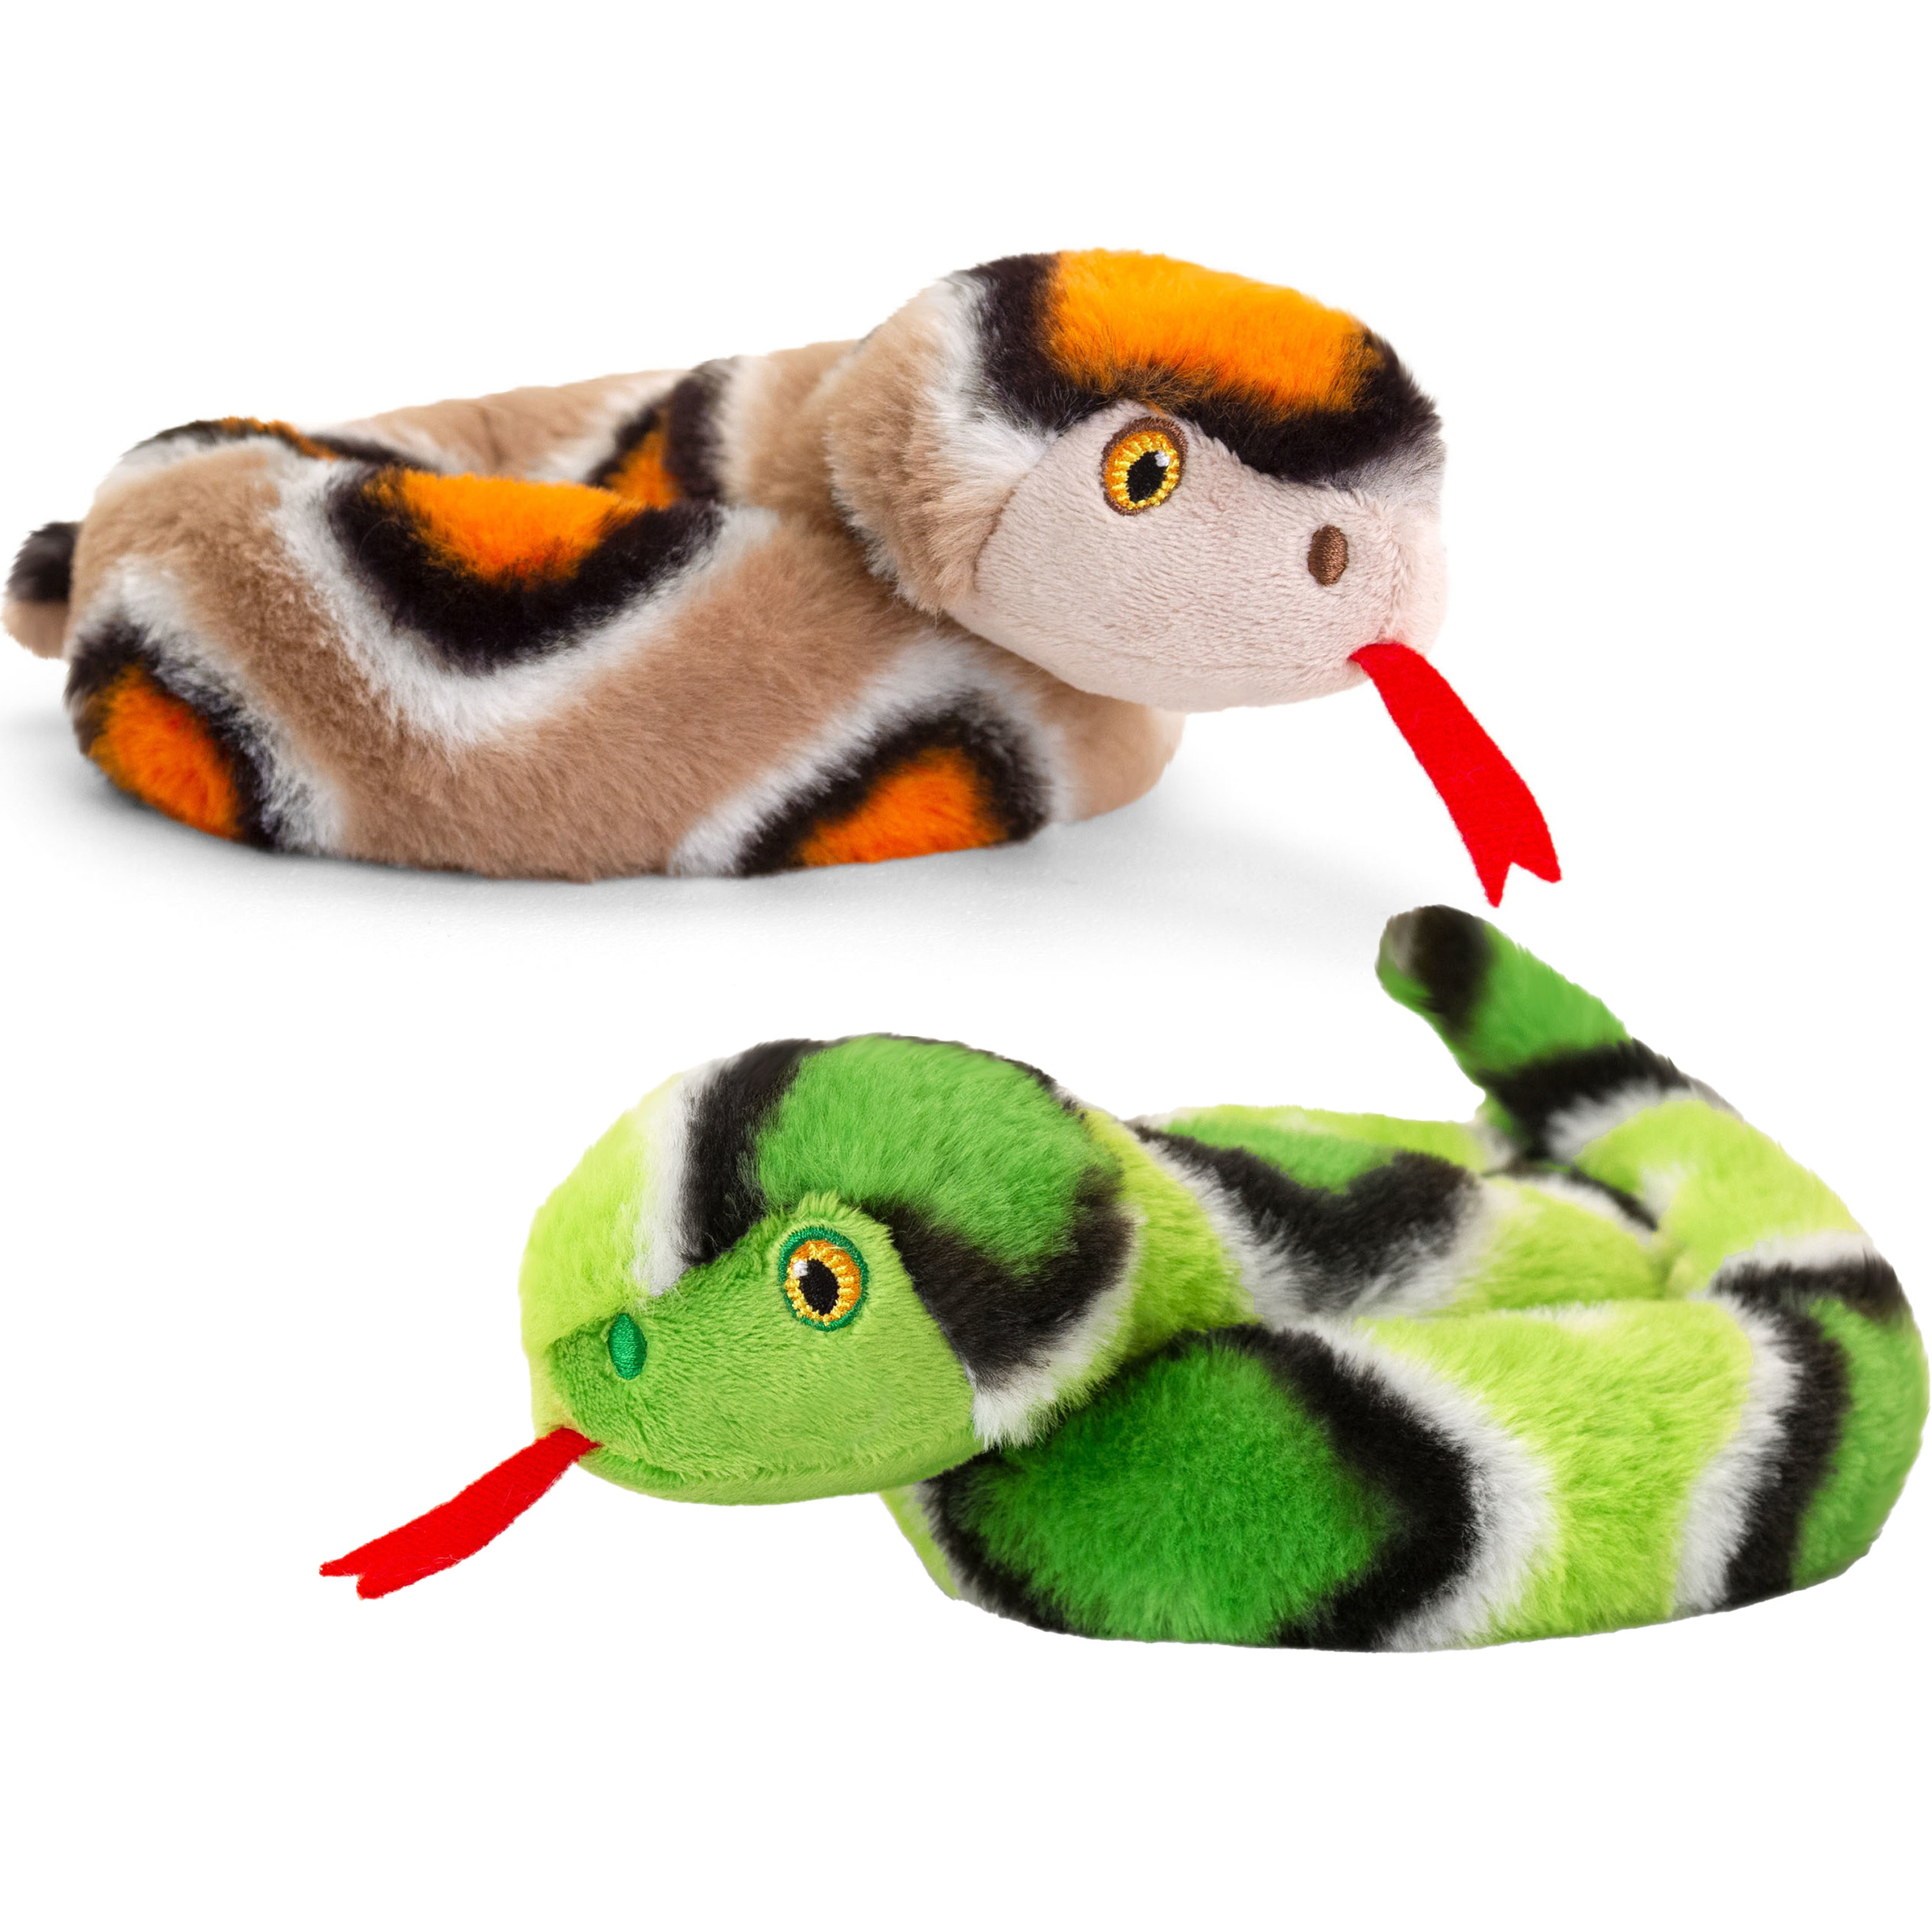 Pluche knuffel dieren kleine opgerolde slangen bruin en groen 65 cm